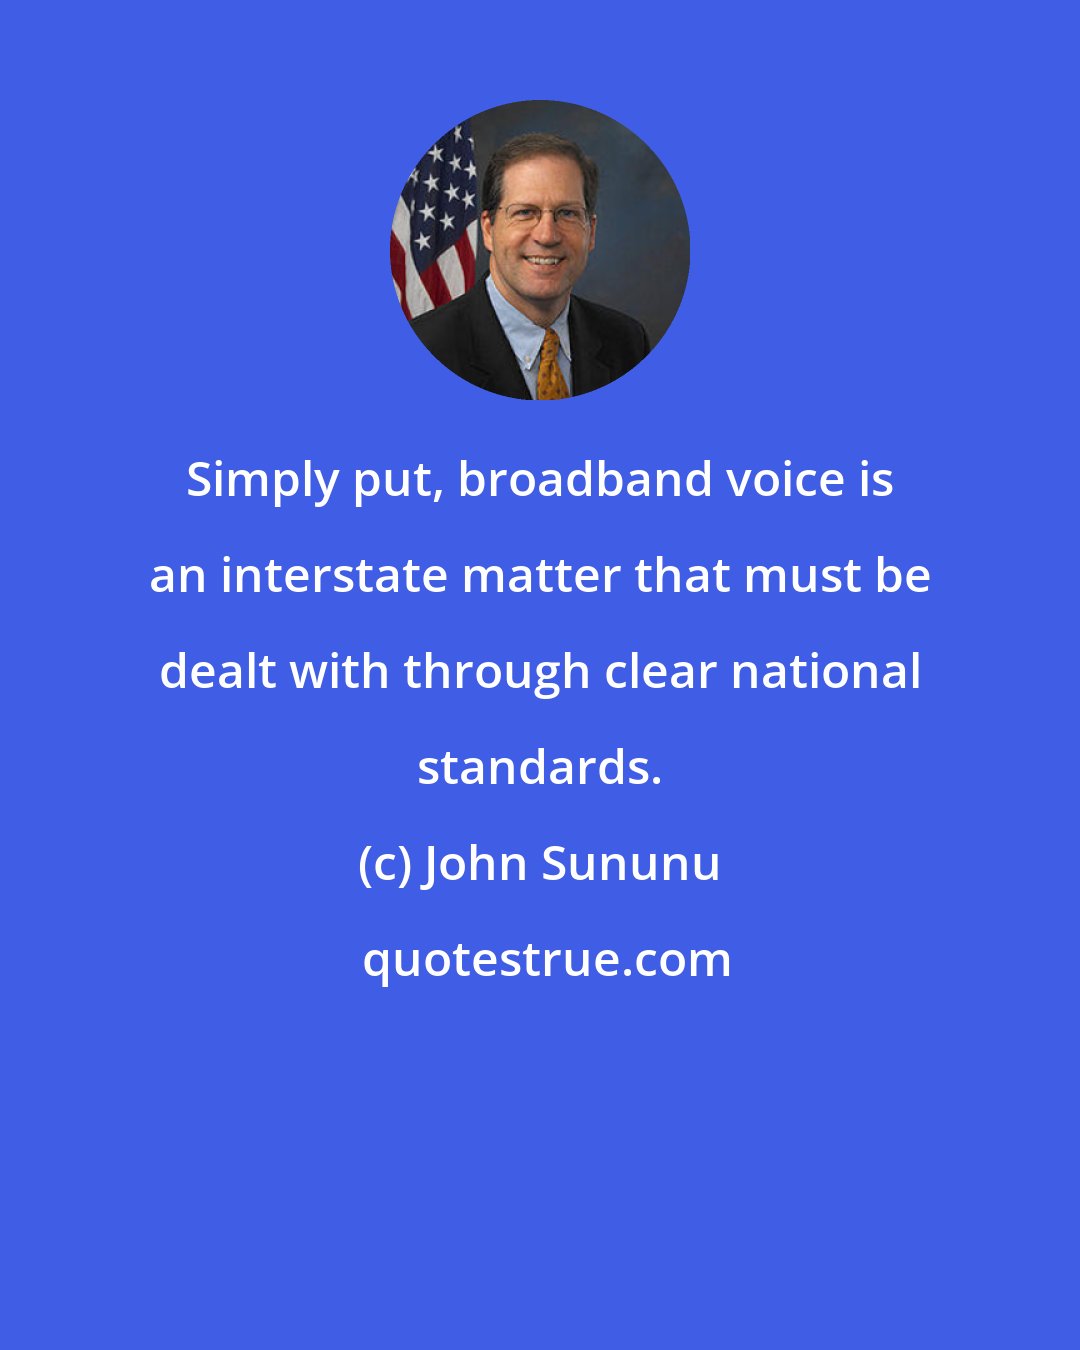 John Sununu: Simply put, broadband voice is an interstate matter that must be dealt with through clear national standards.